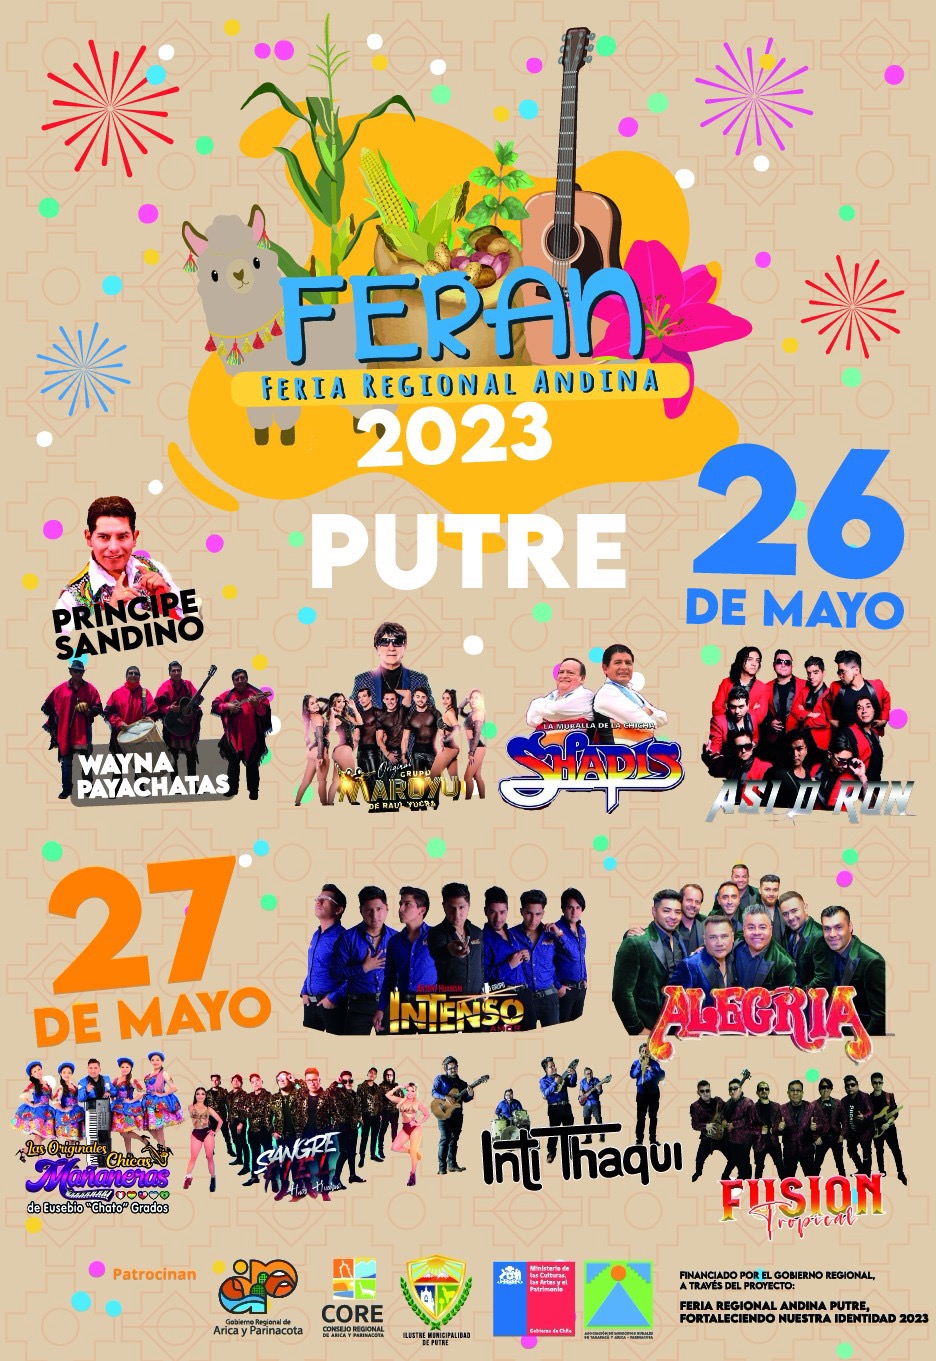 FERAN 2023 Putre Feria Regional Andina